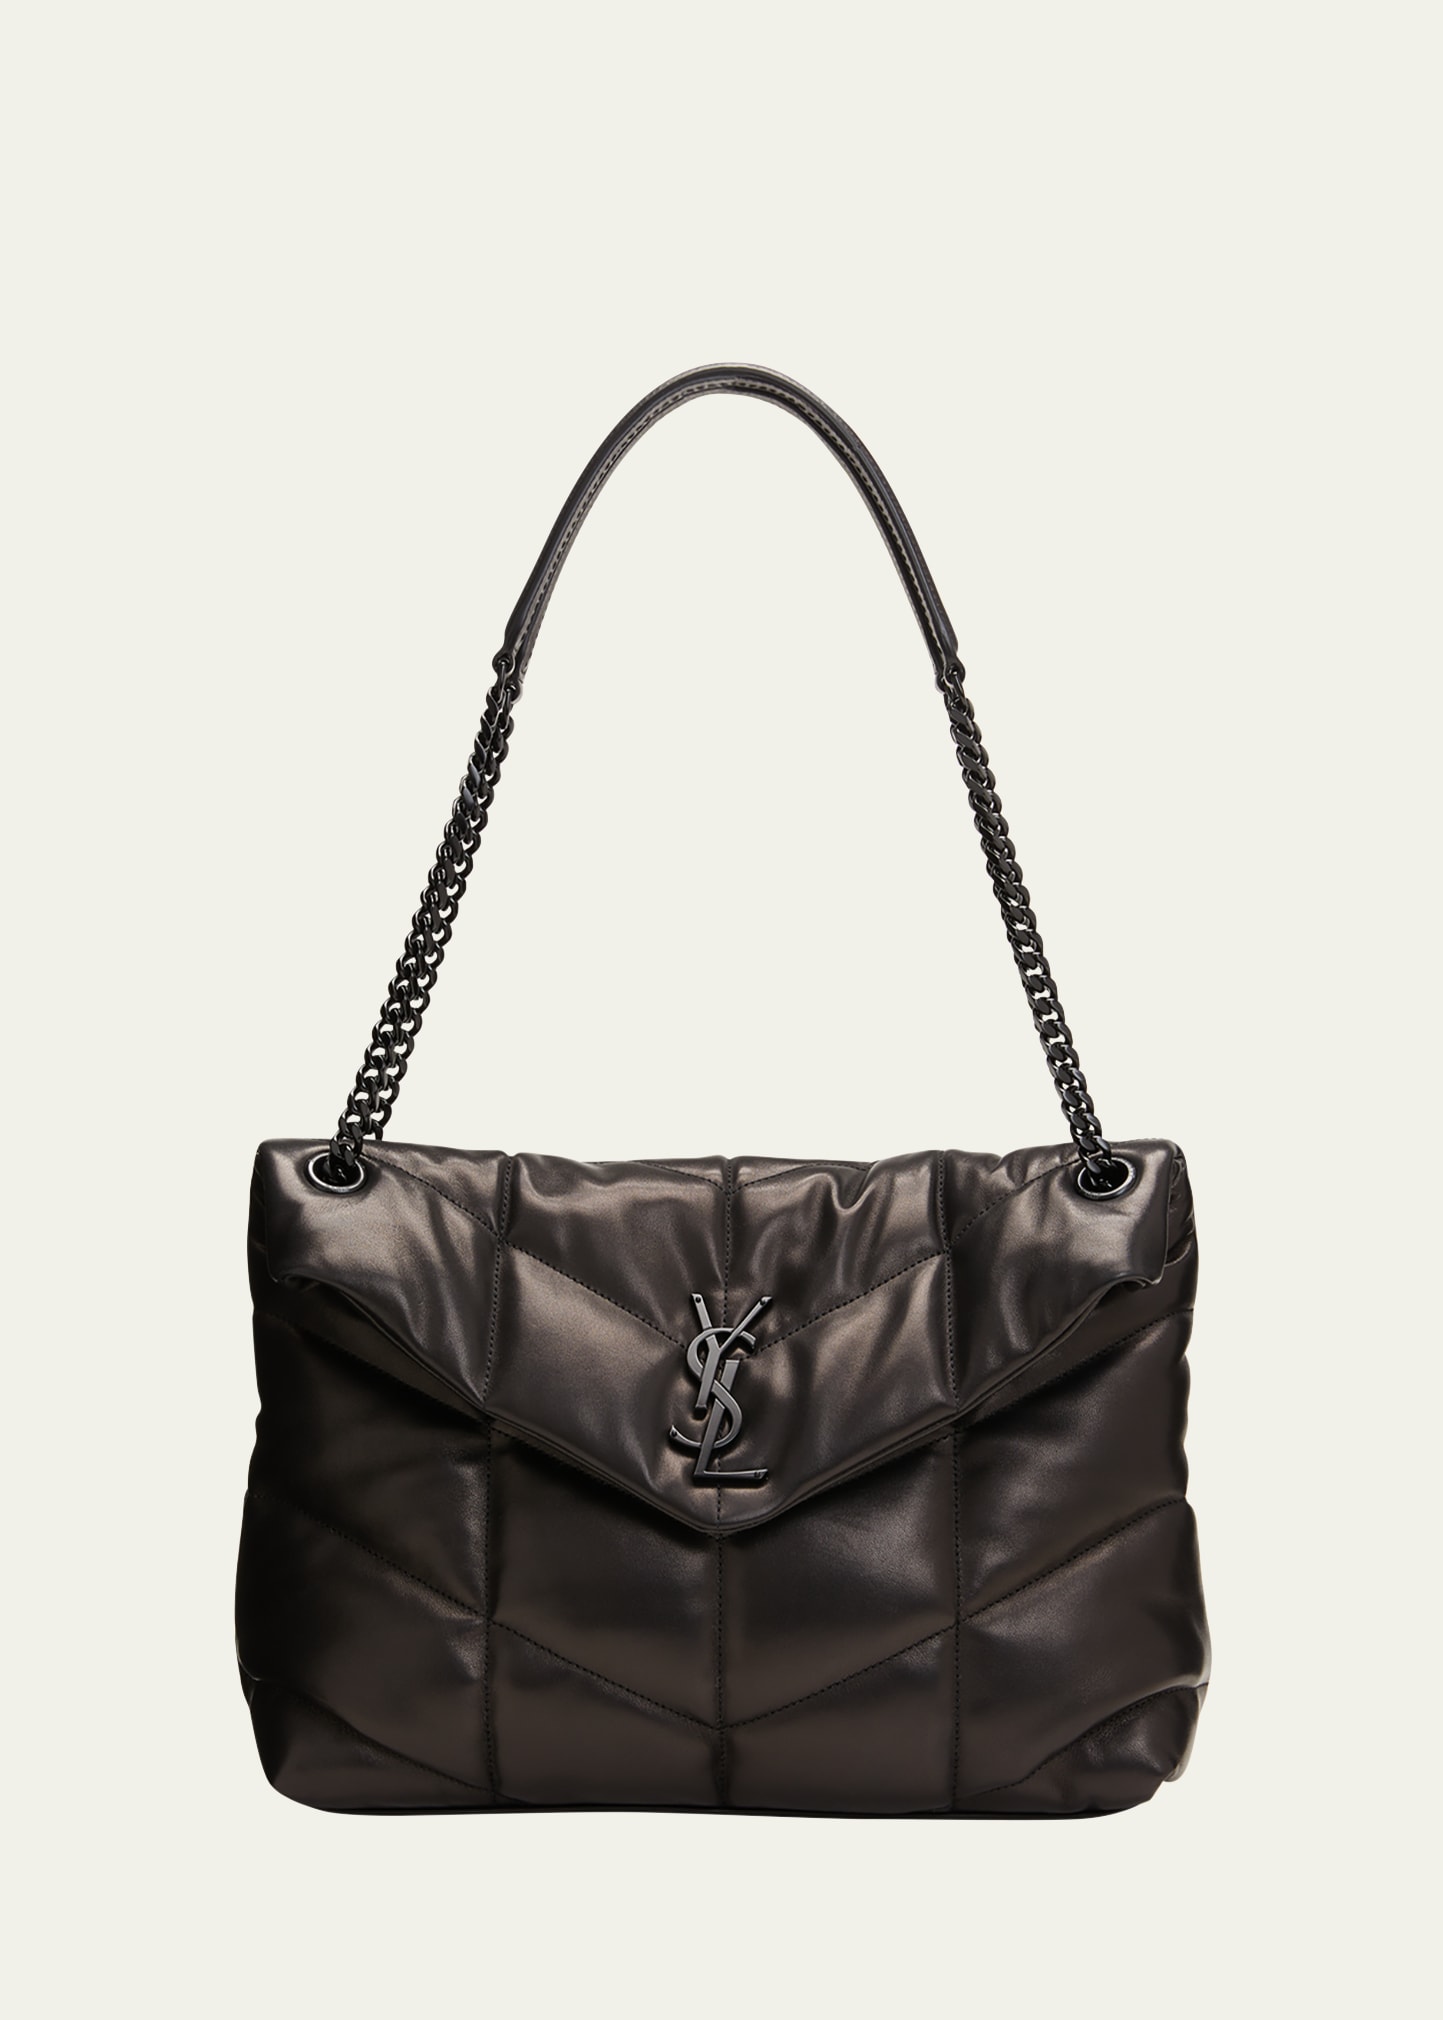 Saint Laurent Small Puffer Metallic Chain Shoulder Bag - Bergdorf Goodman